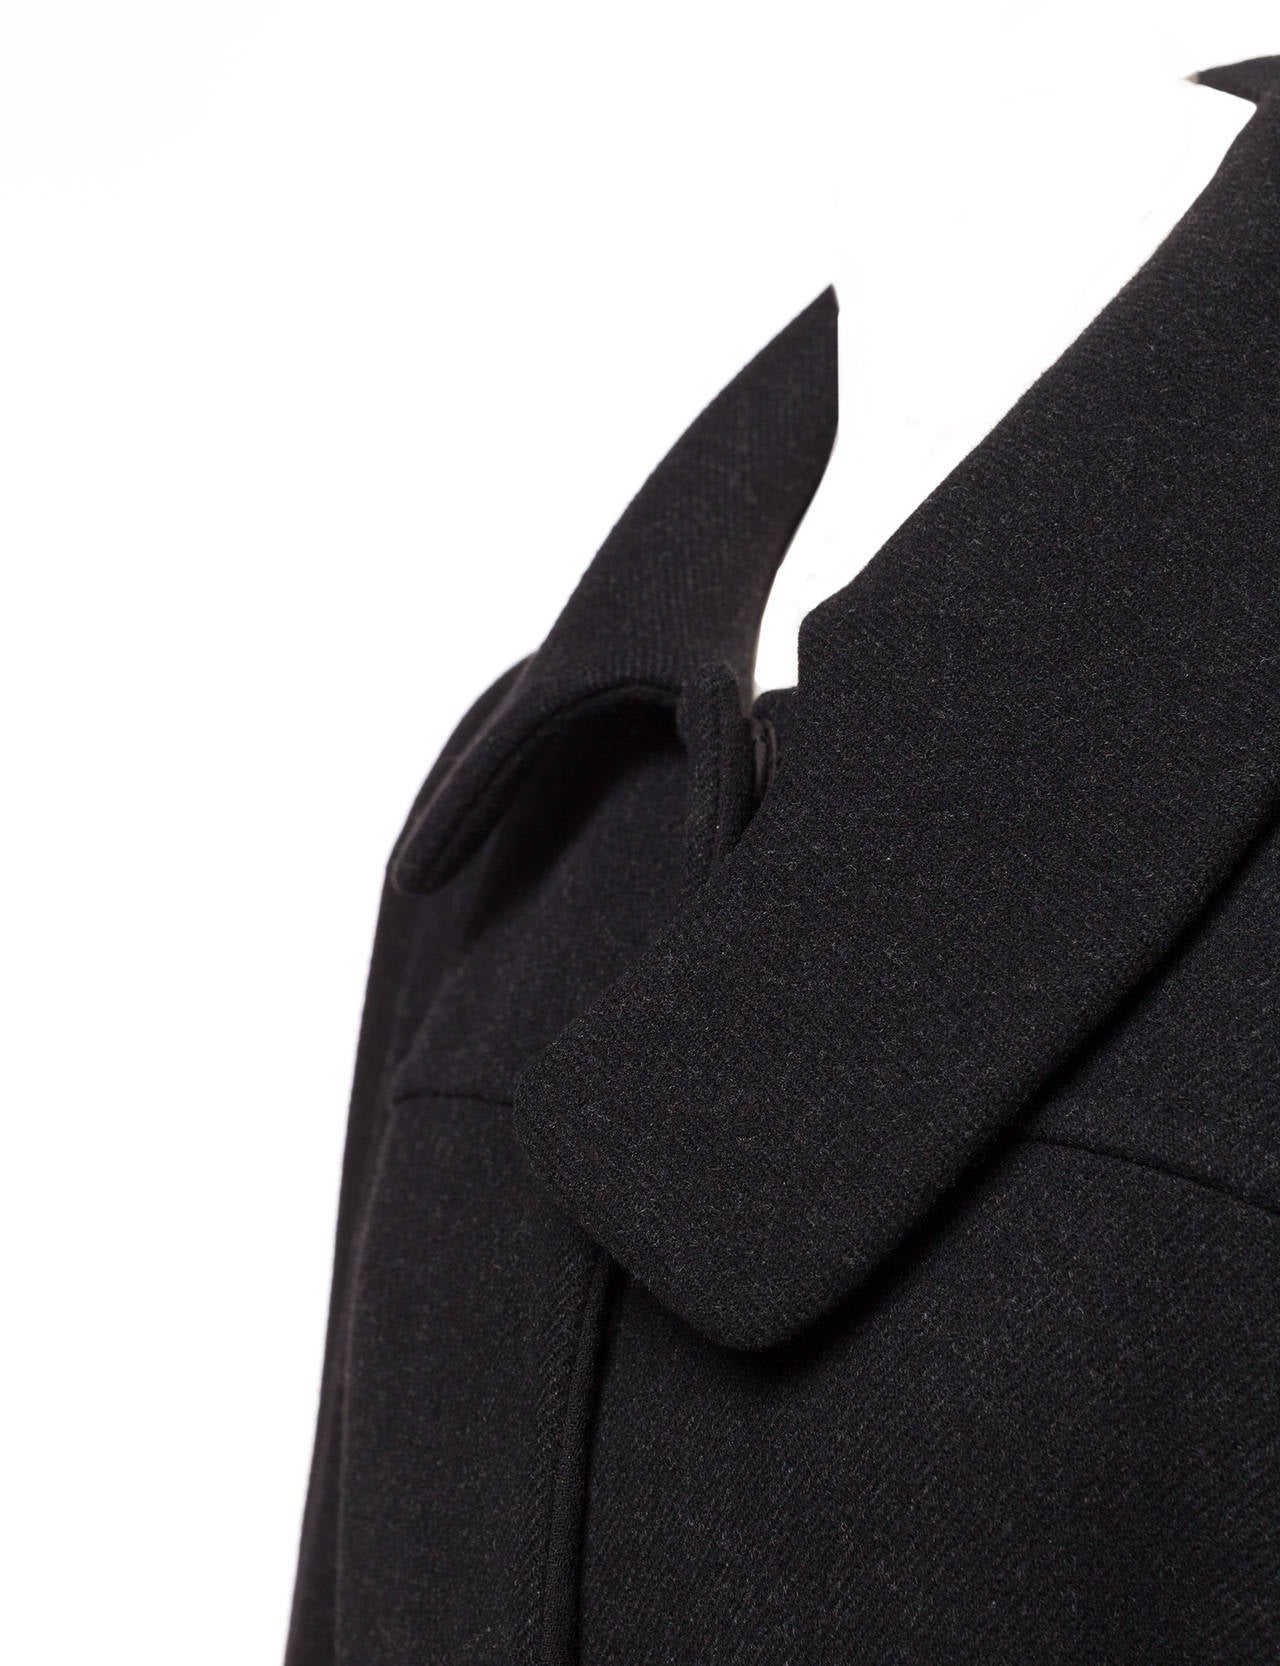 Prada minimal Wool coat with collar detail and large pockets, Sz. M 3